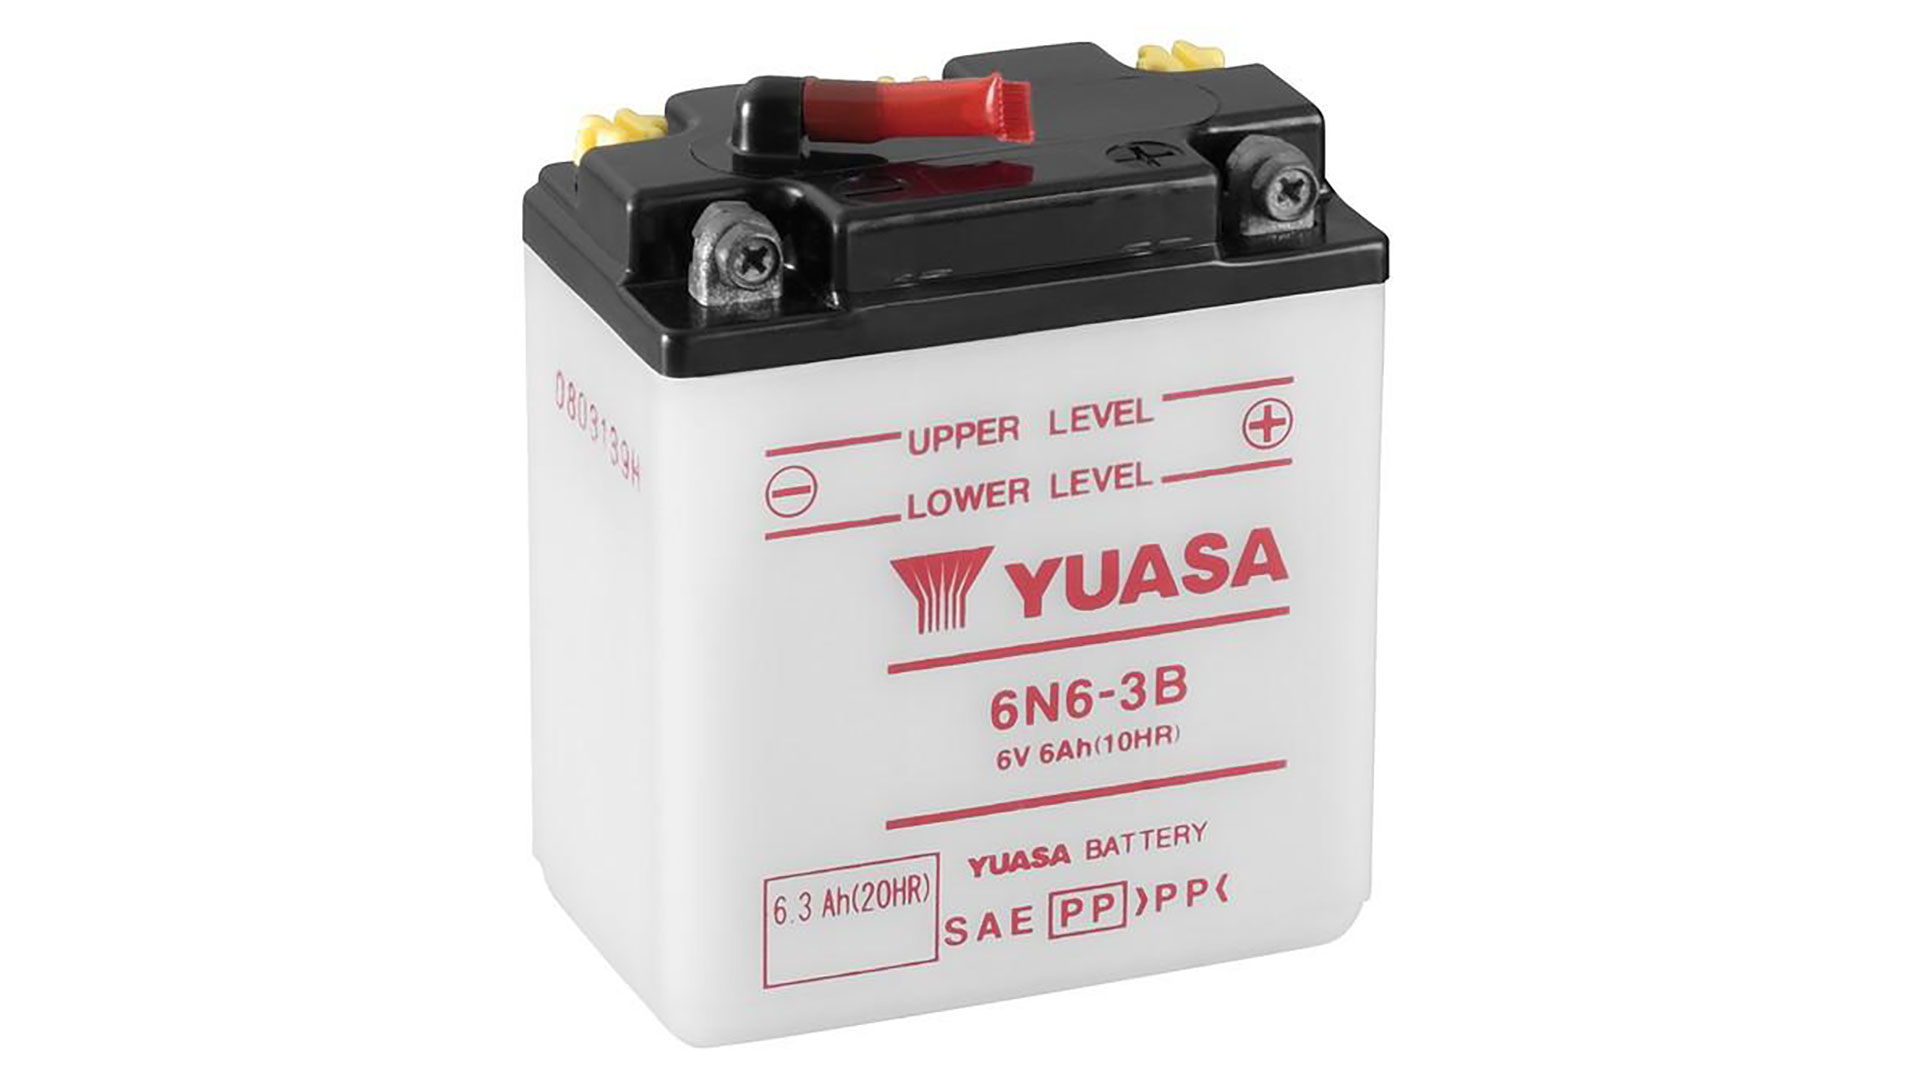 6N6-3B (DC) 6V Yuasa Conventional Battery